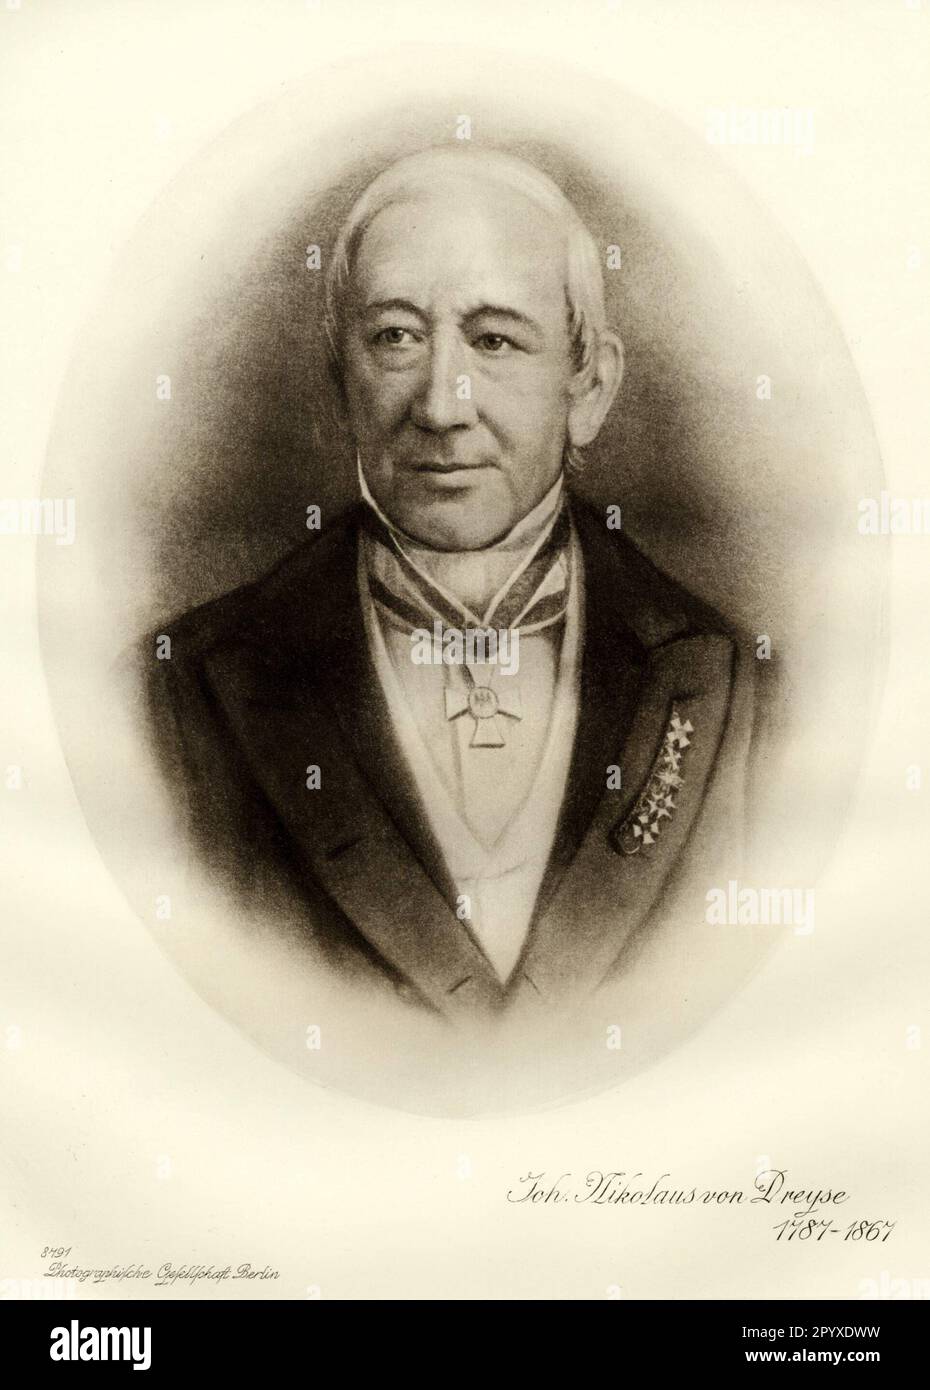 Johann Nikolaus von Dreyse (1787-1867), German inventor. Photo: Heliogravure, Corpus Imaginum, Hanfstaengl Collection. [automated translation] Stock Photo